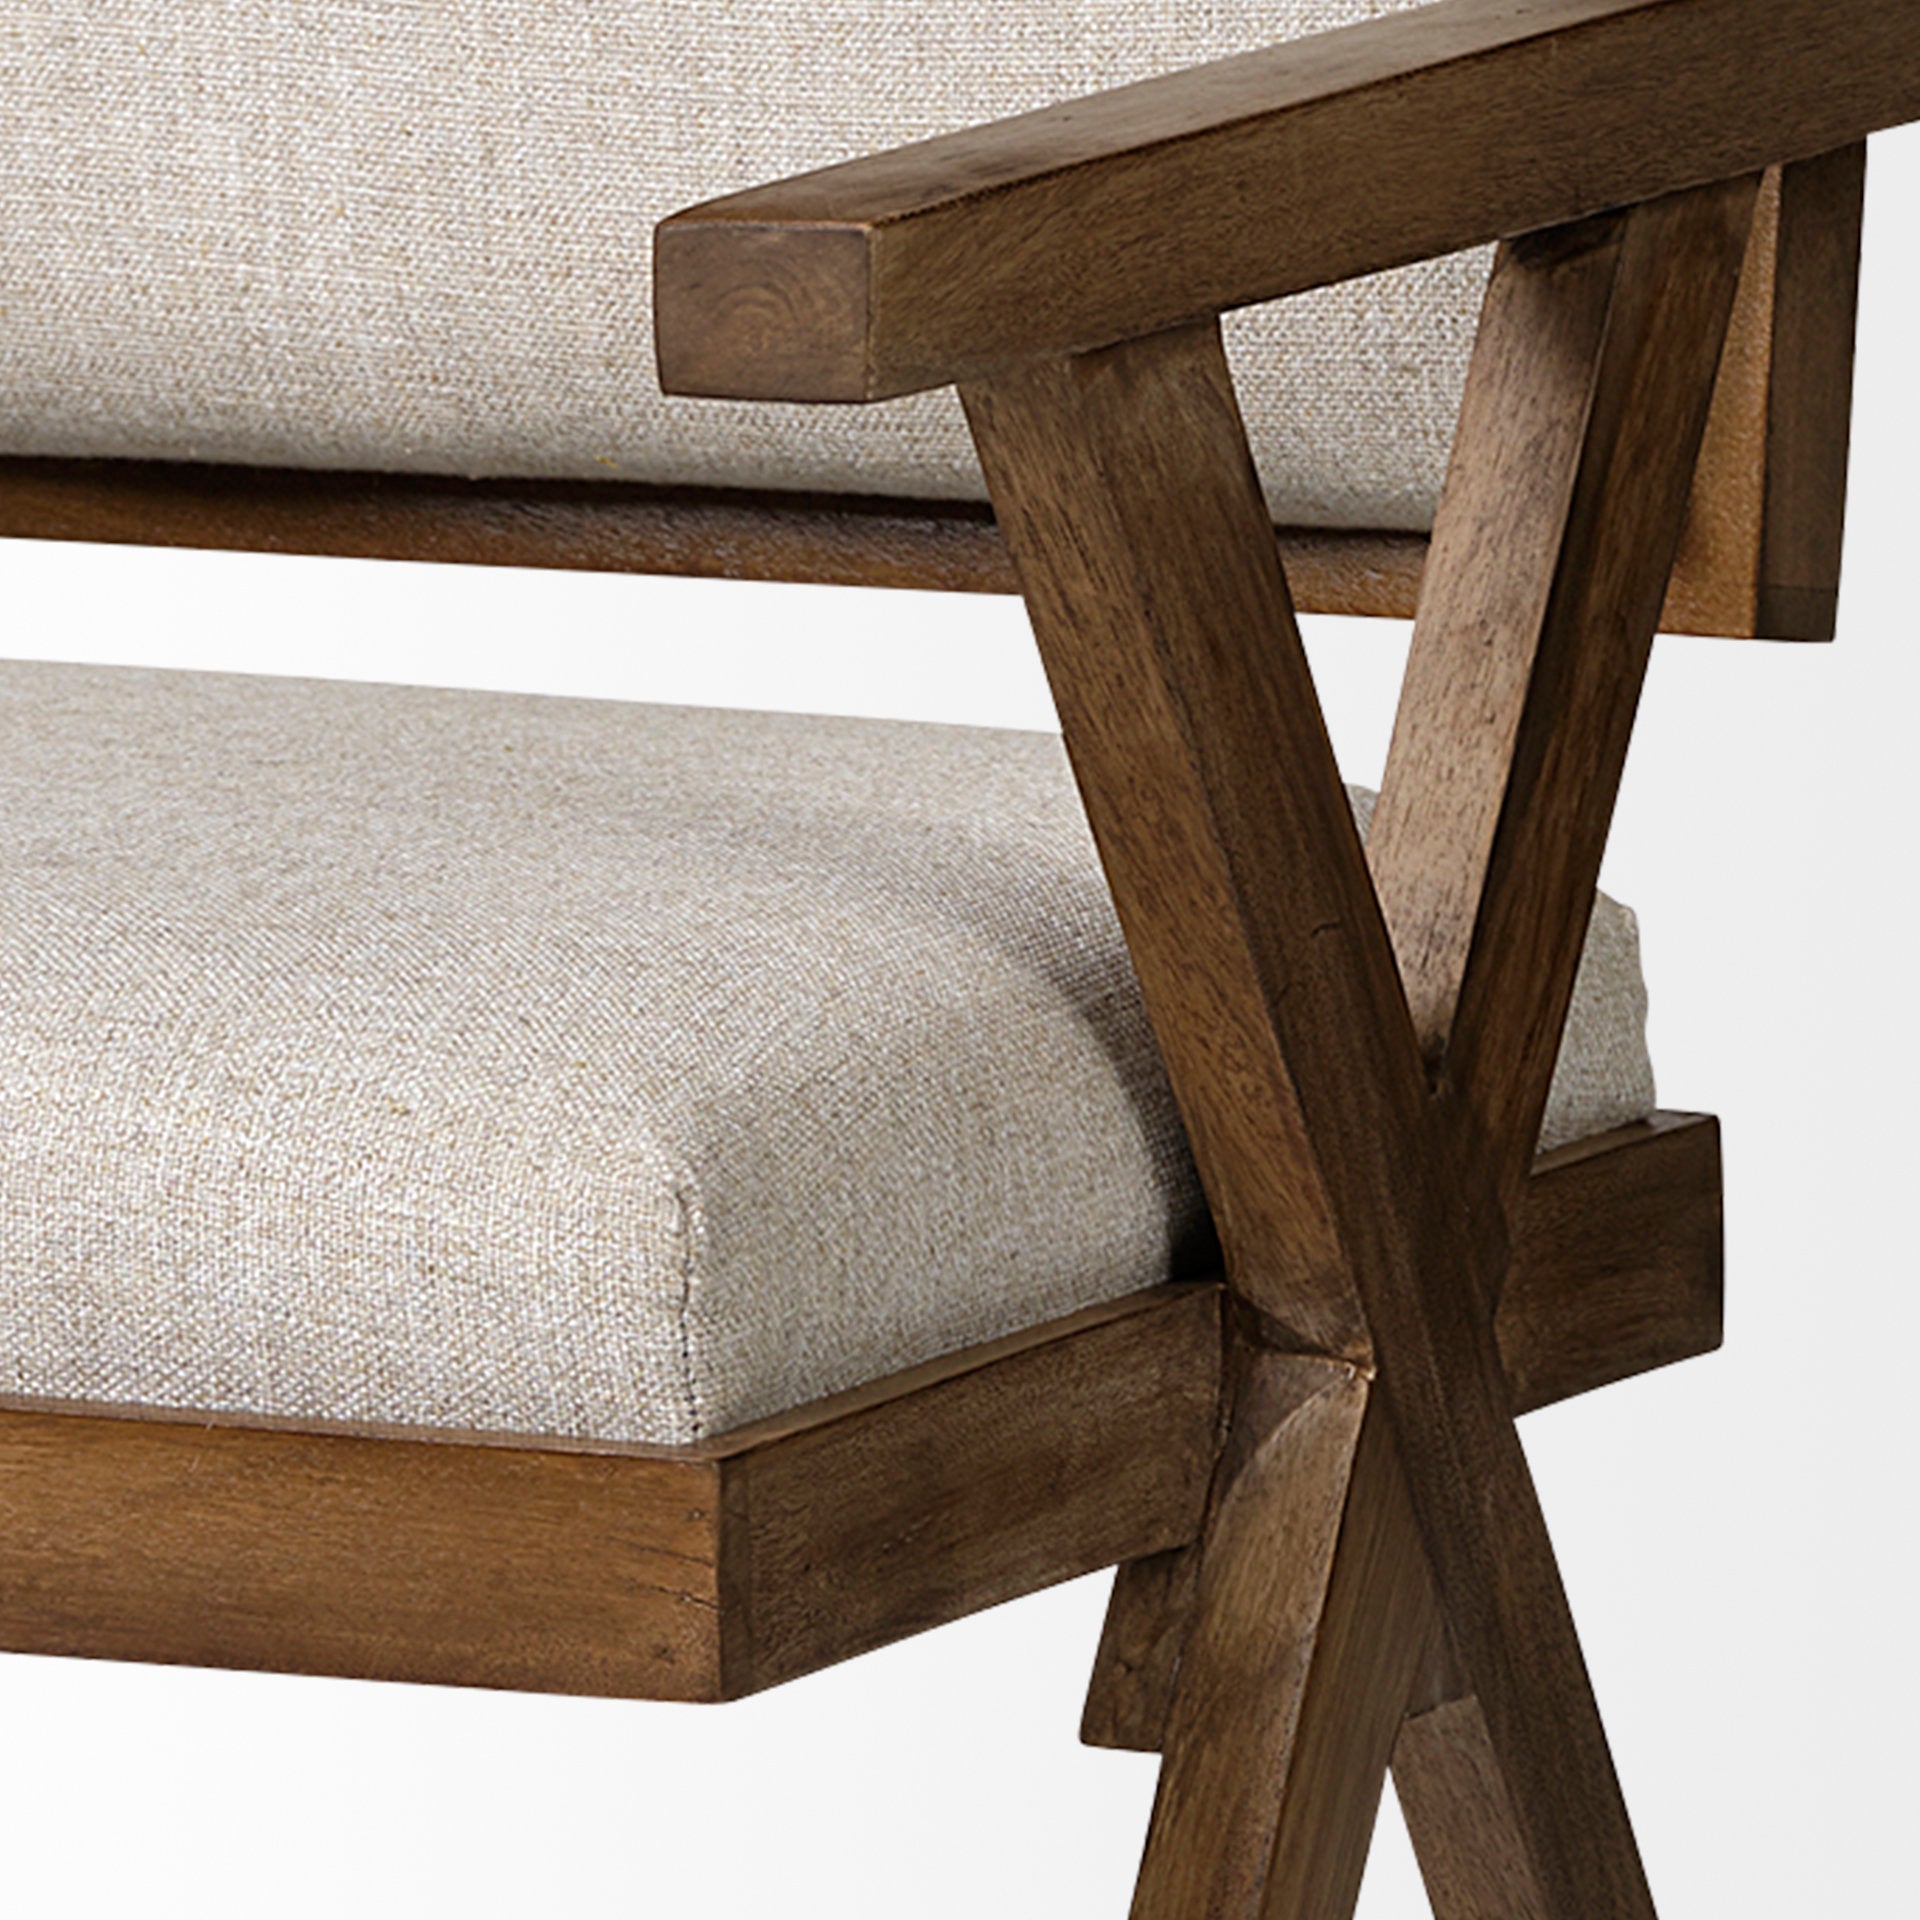 Topanga Dining Chair - Medium Brown Wood